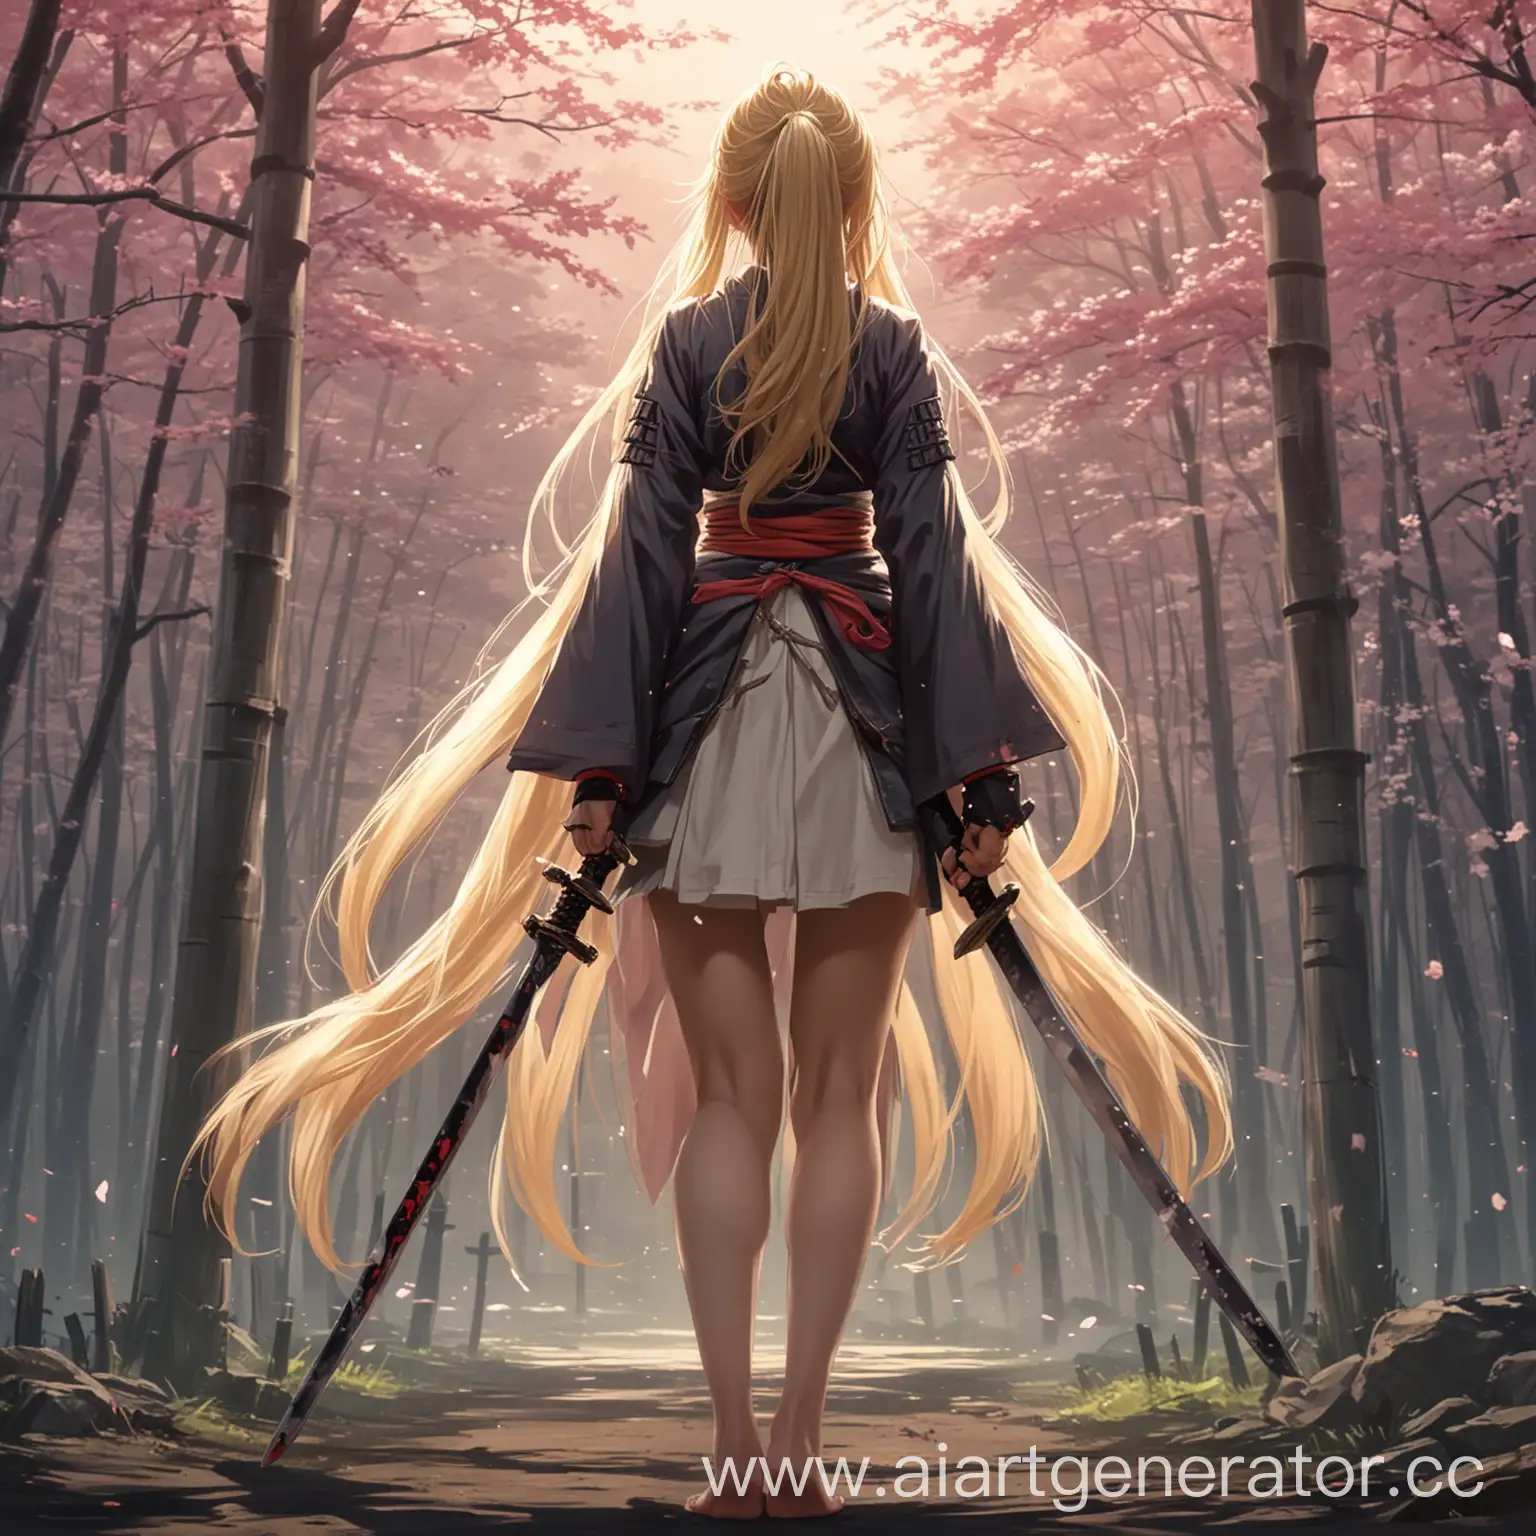 Blonde-Anime-Girl-with-Samurai-Swords-and-Neko-Companion